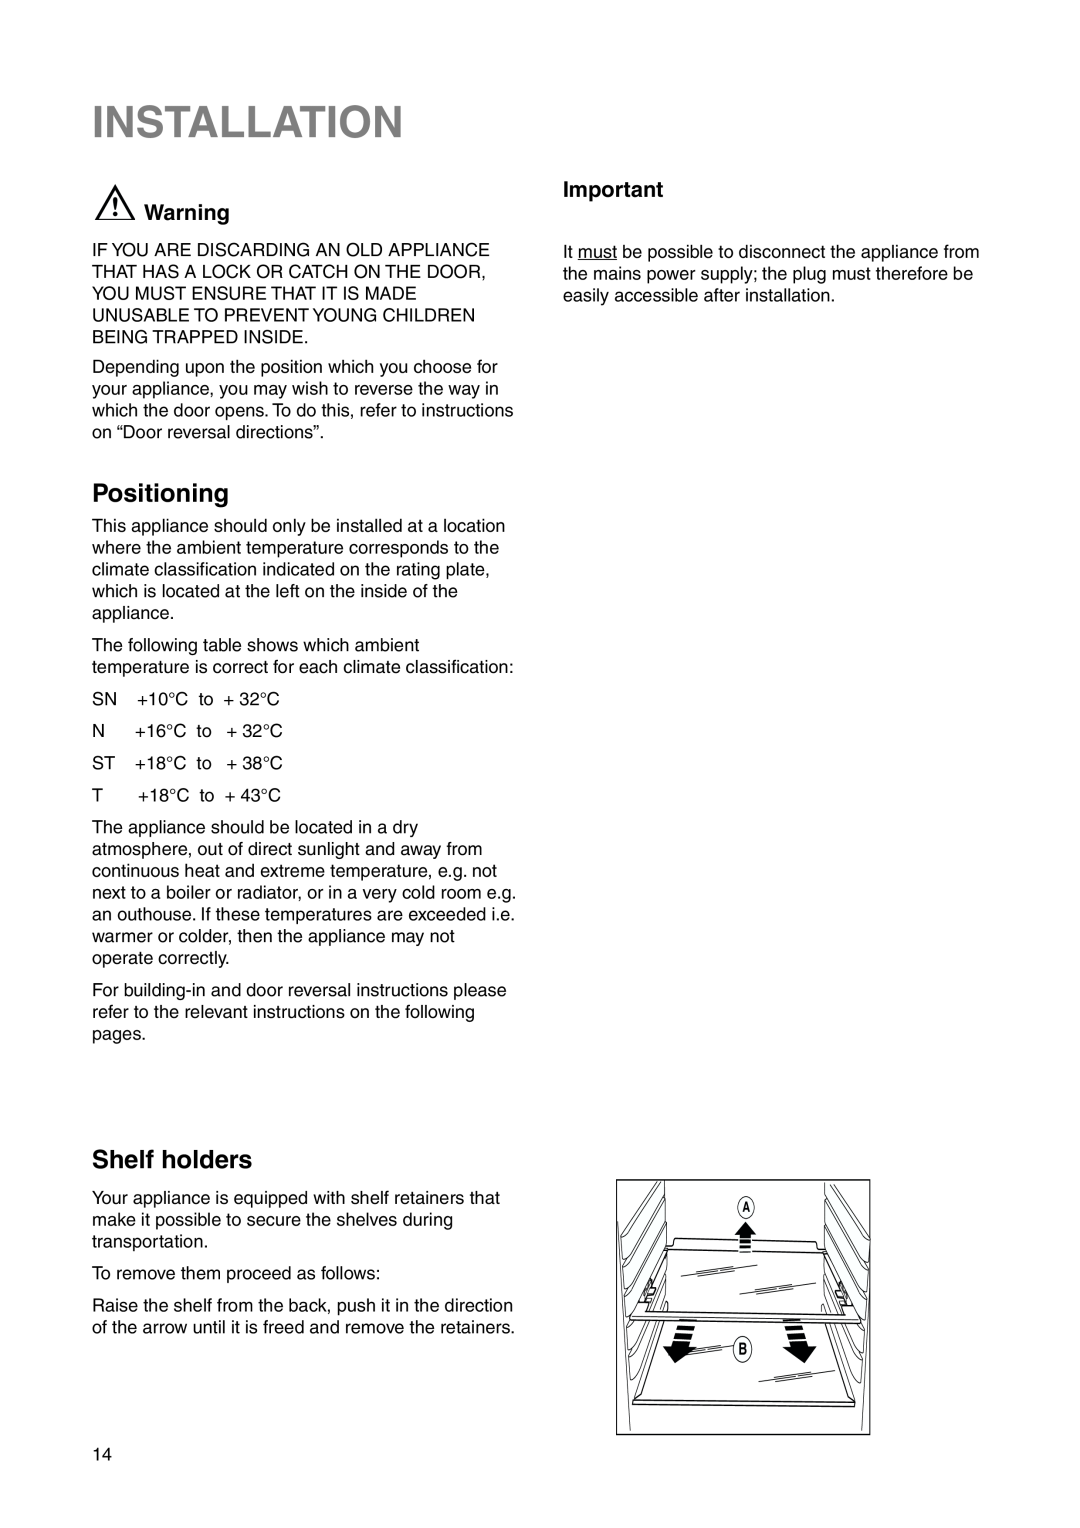 Zanussi ZI 921/8 FF manual Installation, Positioning, Shelf holders 